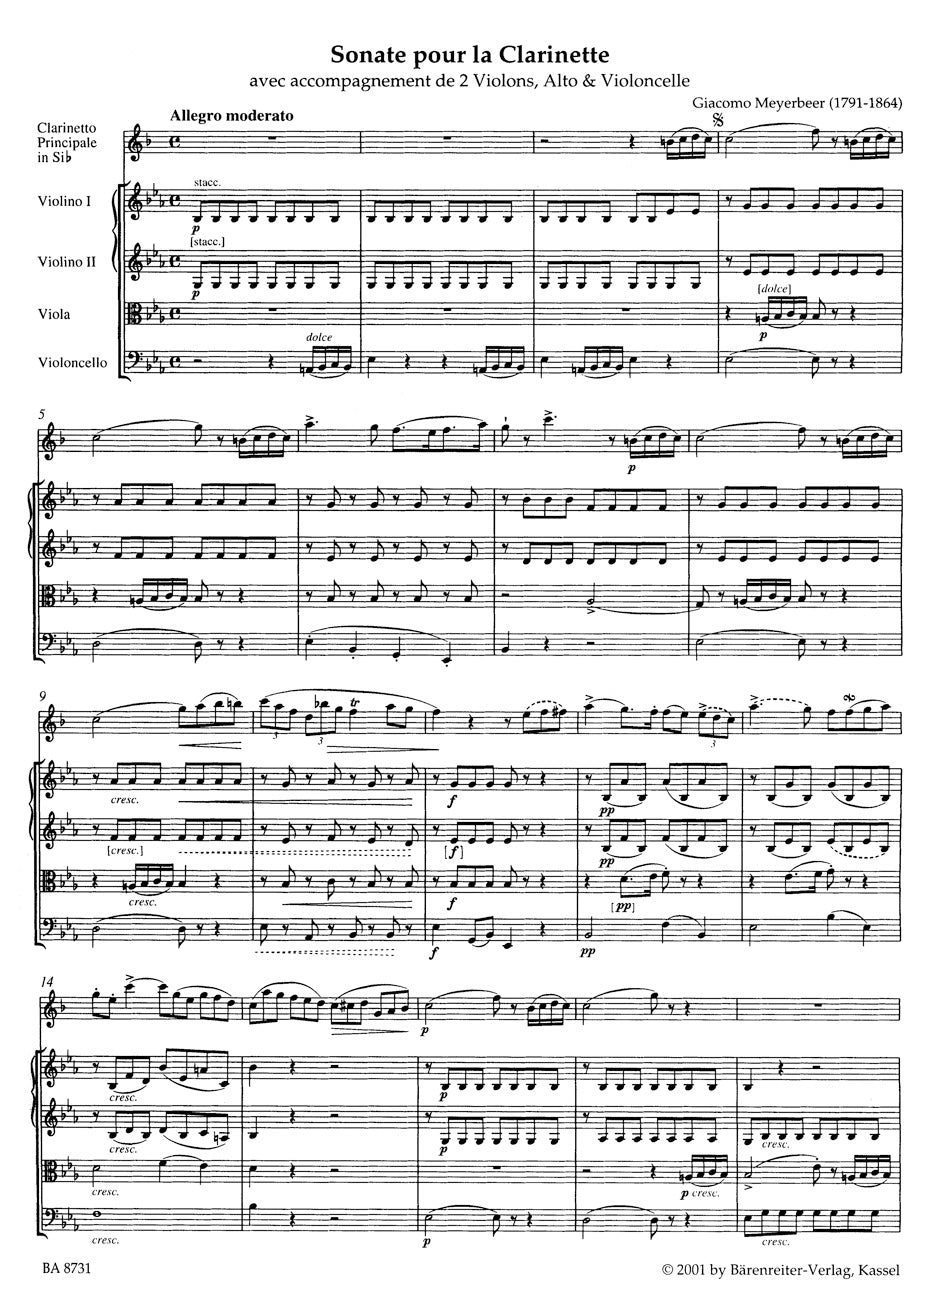 Meyerbeer Quintet in E flat major for Clarinet, 2 Violins, Viola and Violoncello